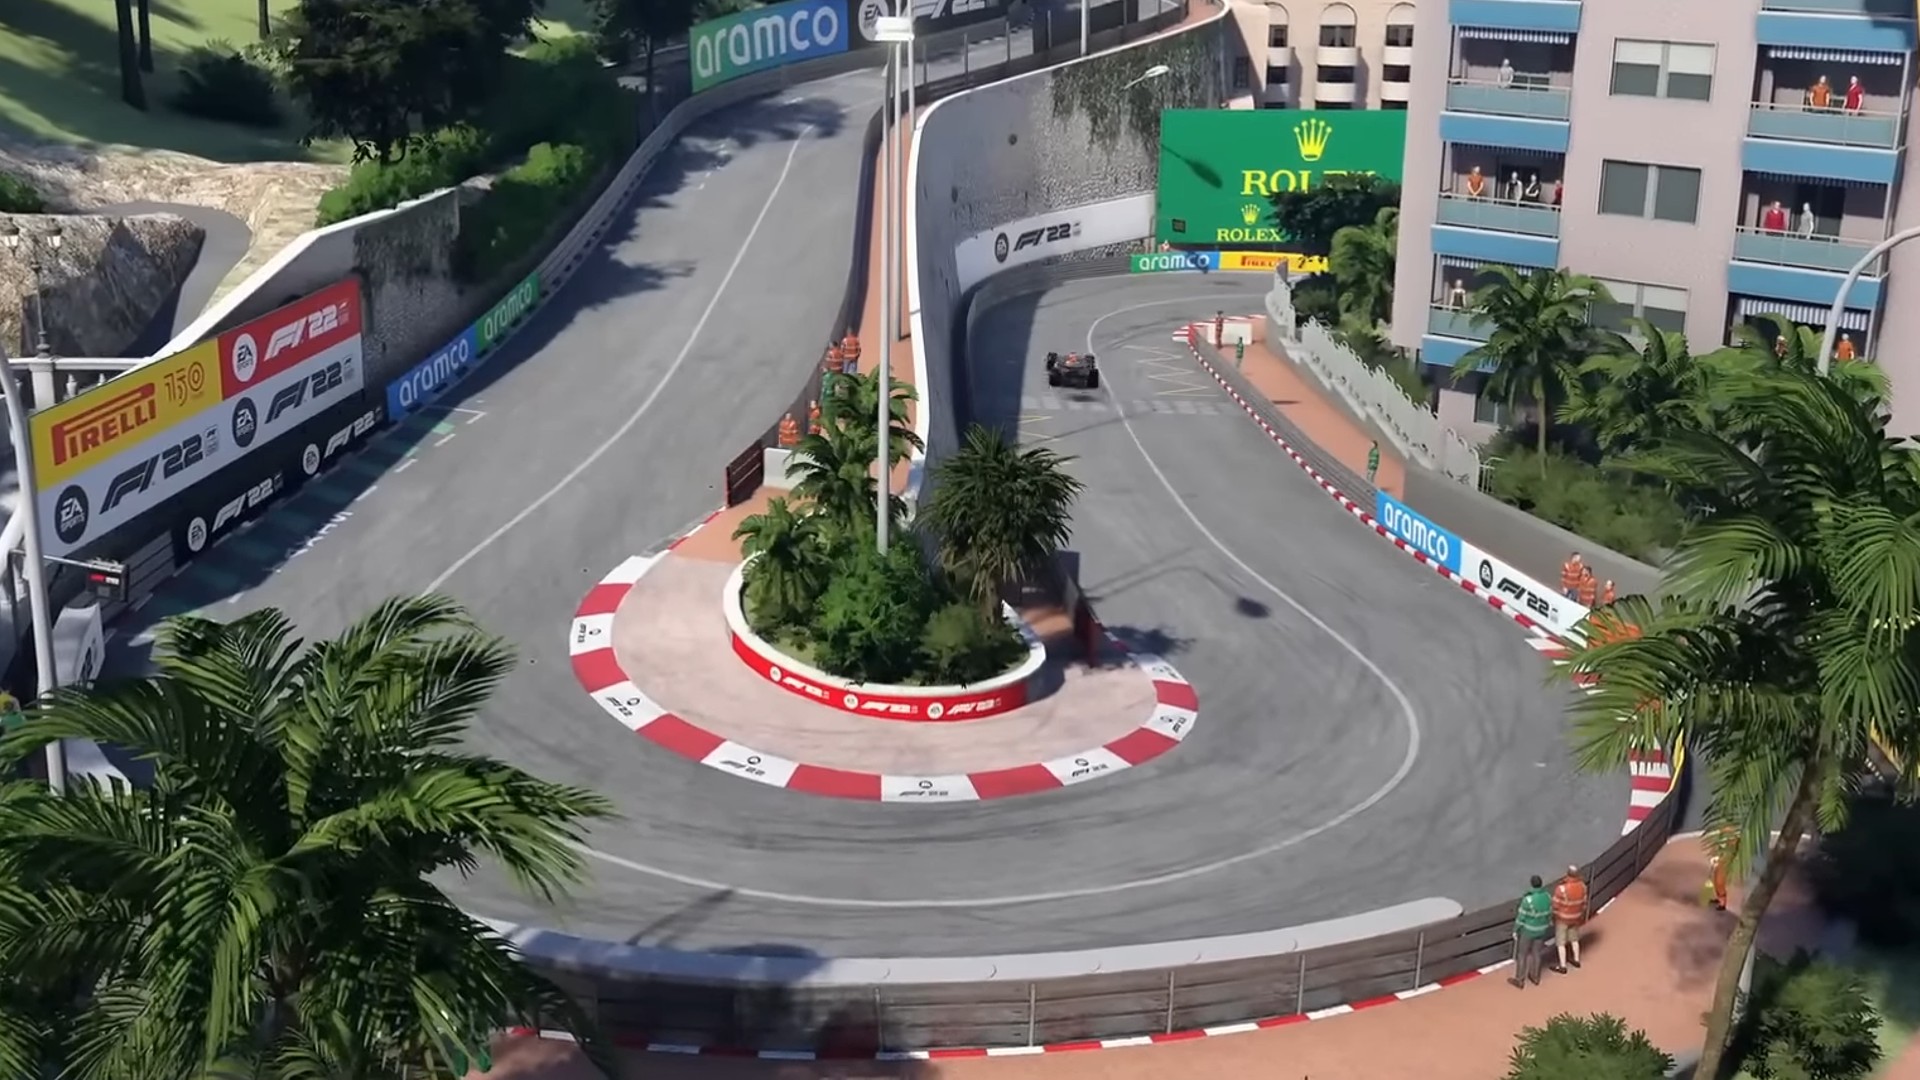 F1 22 Monaco setup: best car settings for the famous street circuit